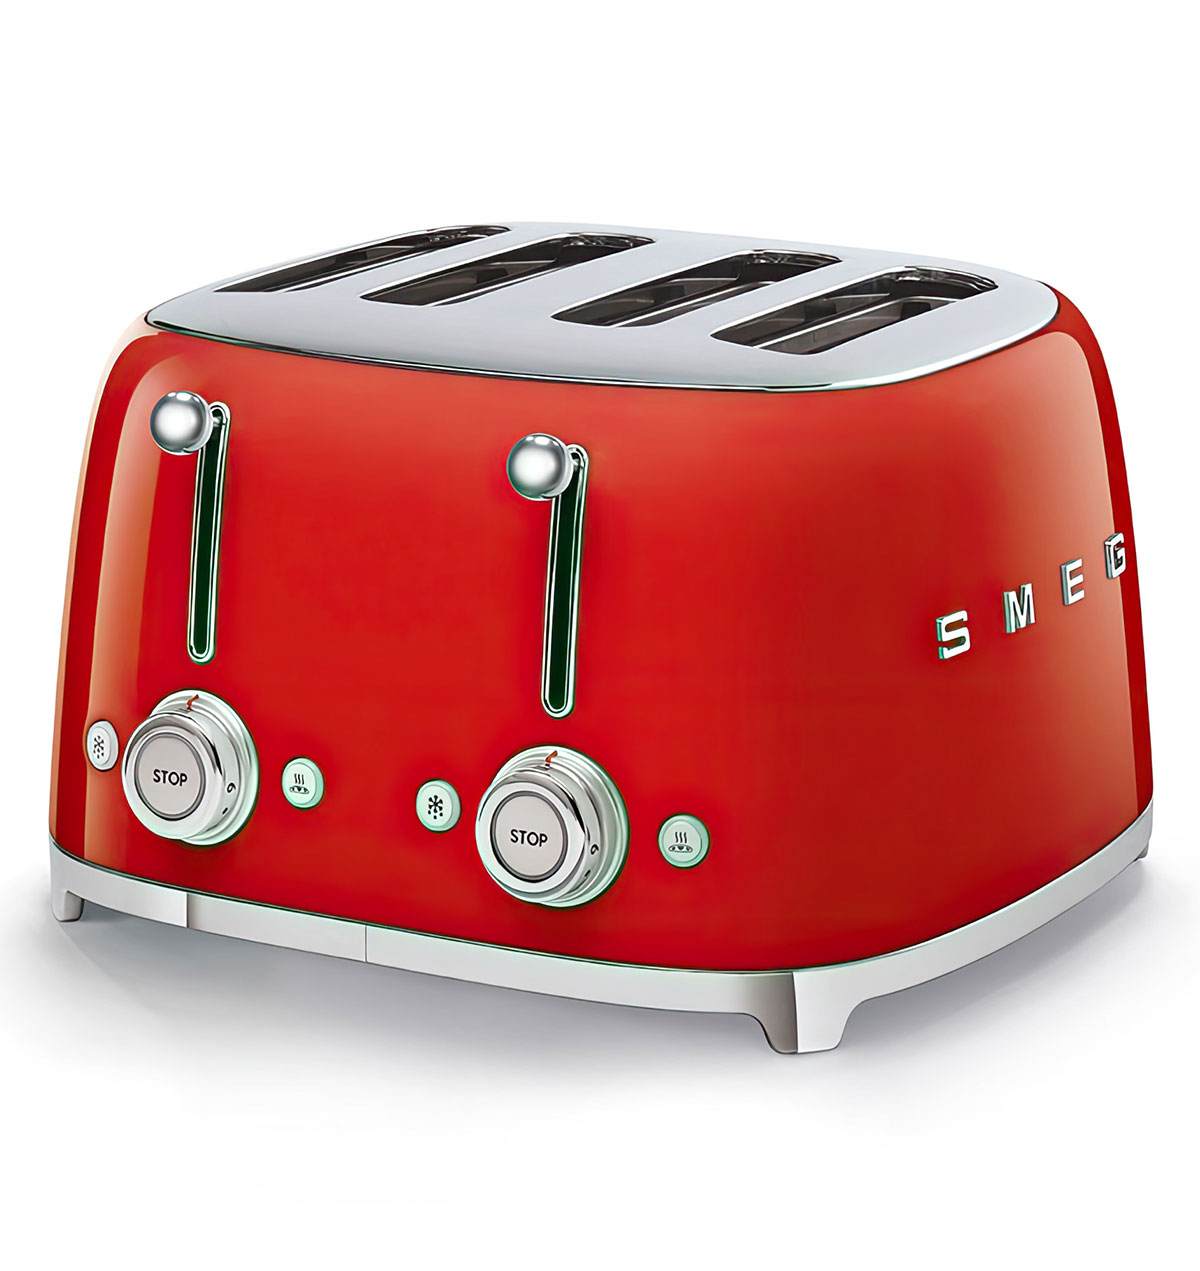 Тостер на 4 ломтика Smeg 50’s Style, красный тостер на 4 ломтика smeg 50’s style красный